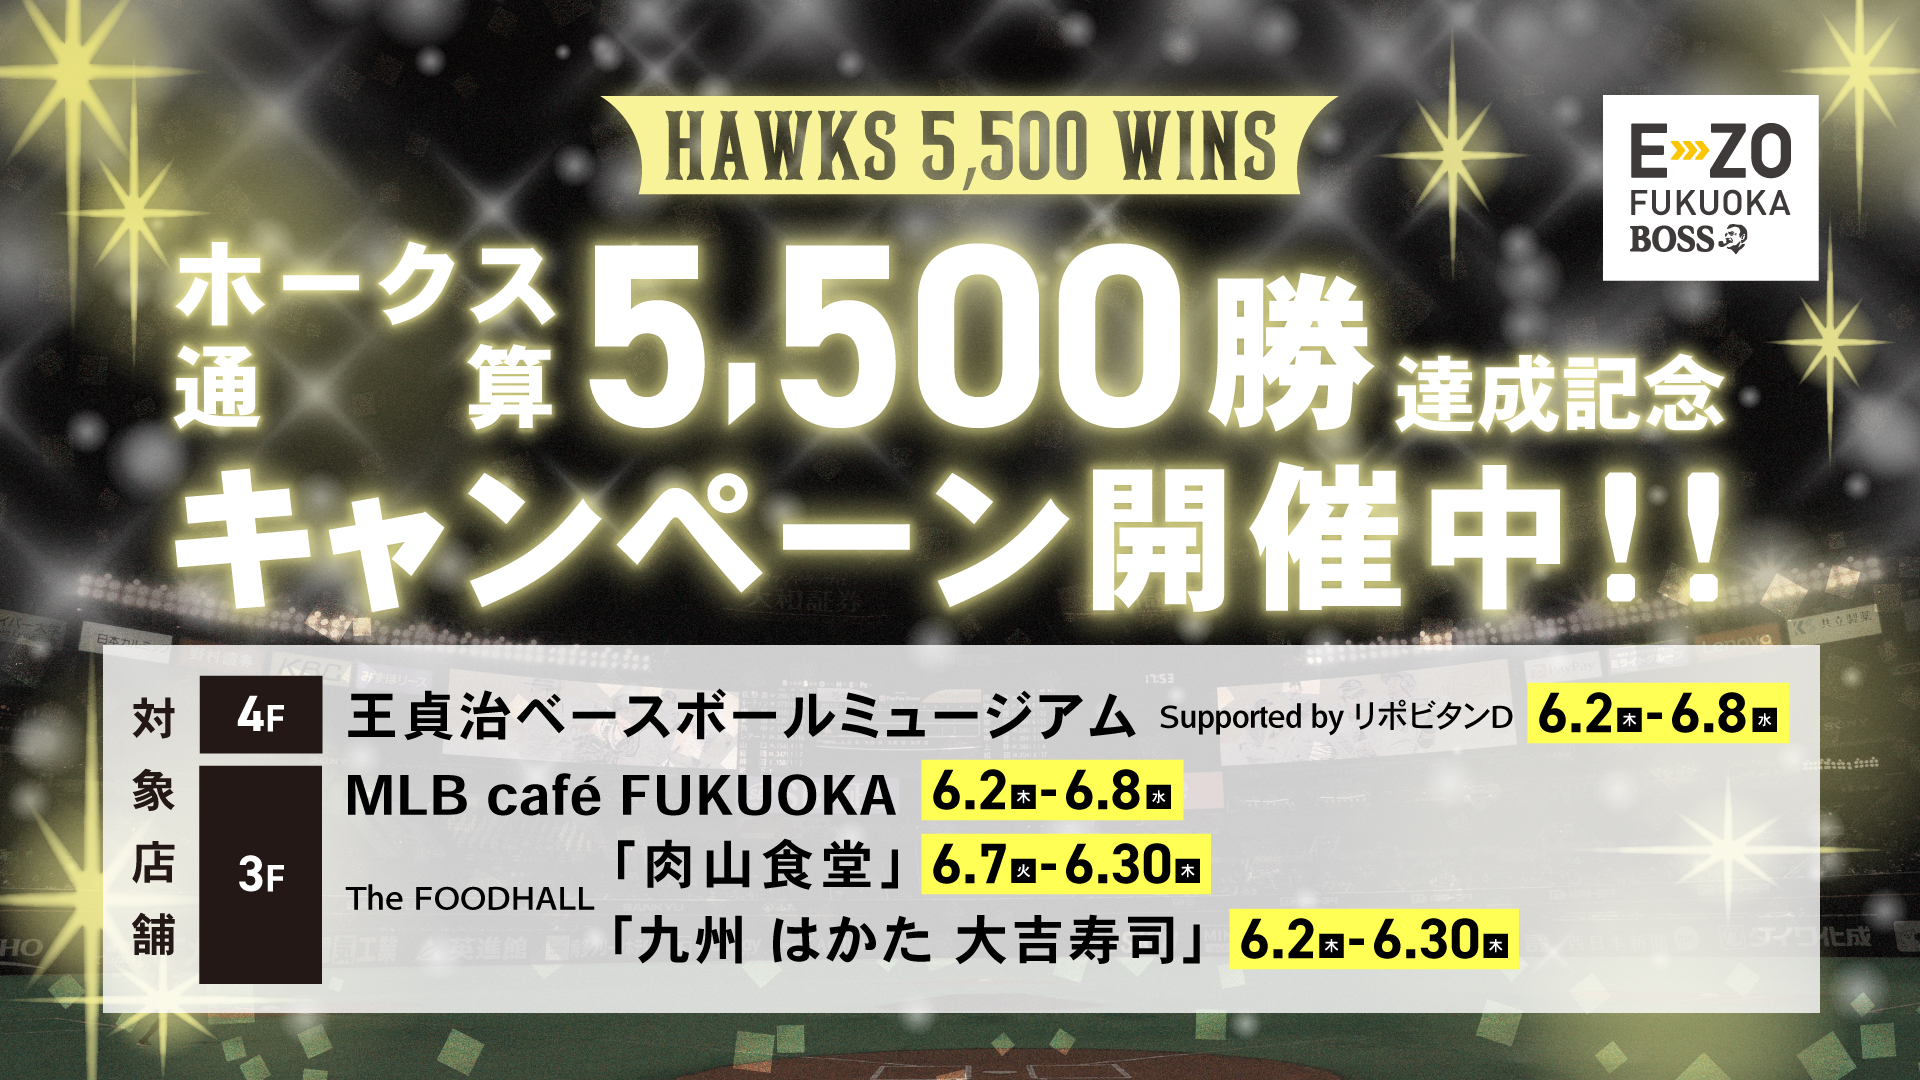 Hawks total 5,500 wins commemorative campaign